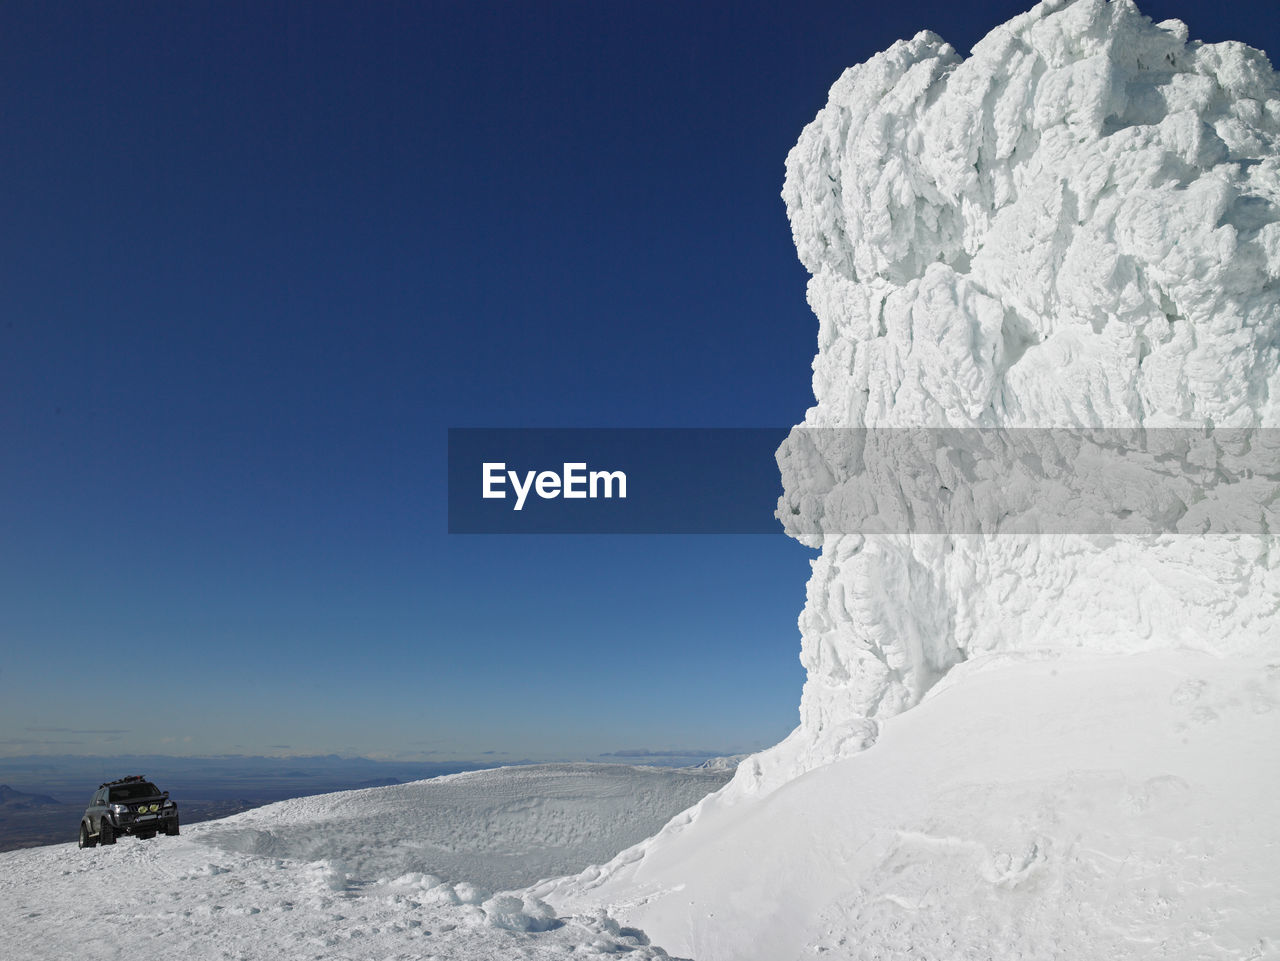 Suv on top of the glacier and volcano eyjafjallajökull